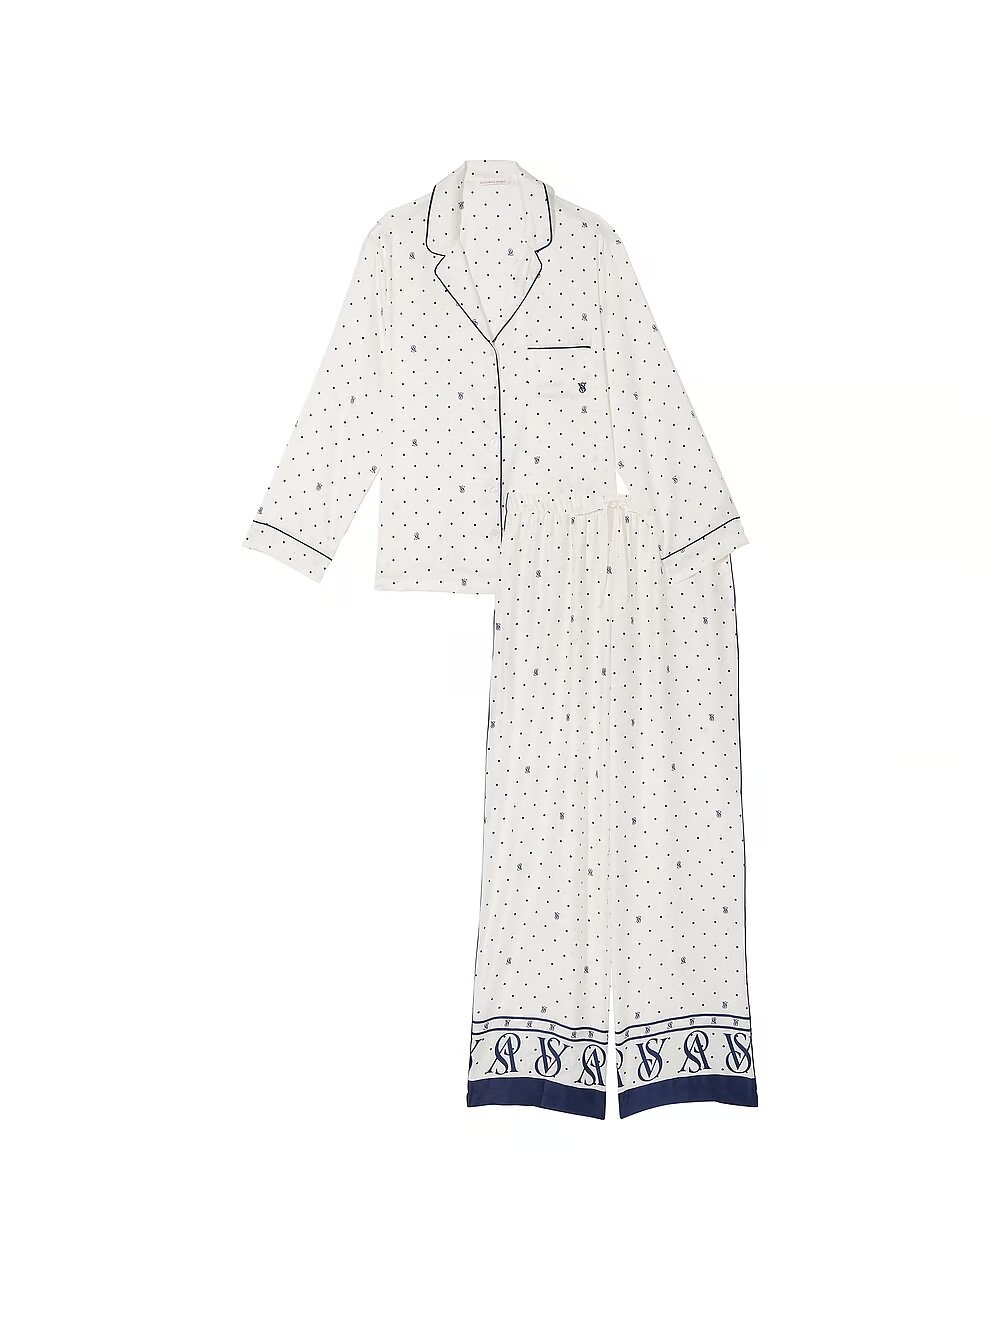 Атласная пижама Victoria's Secret Satin Long Pajama Set 191387QAY фото